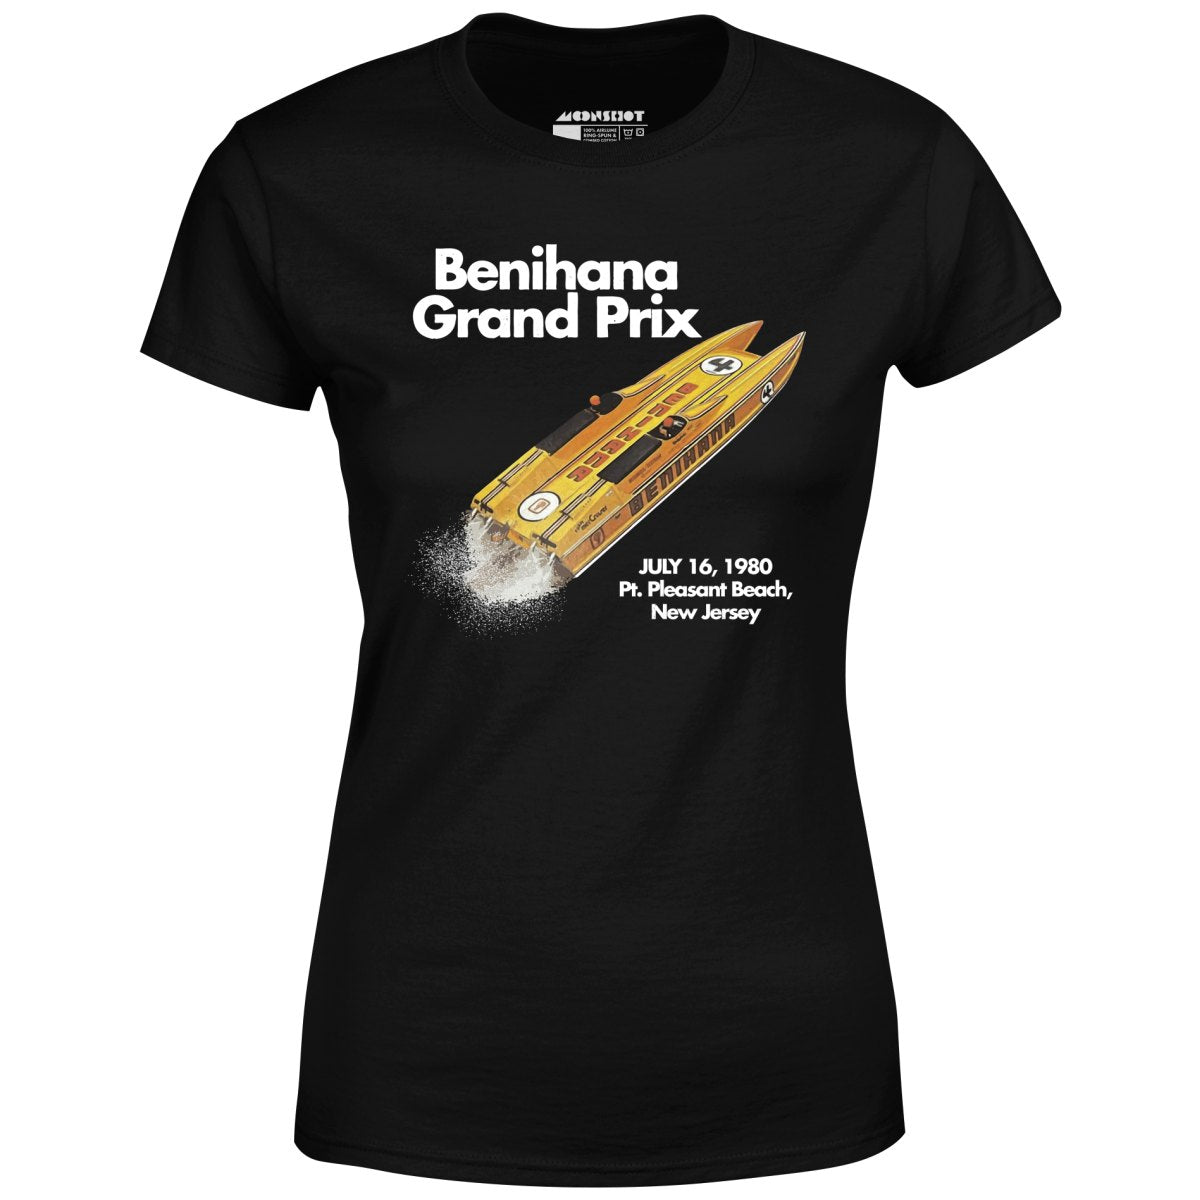 1980 Benihana Grand Prix - Women's T-Shirt